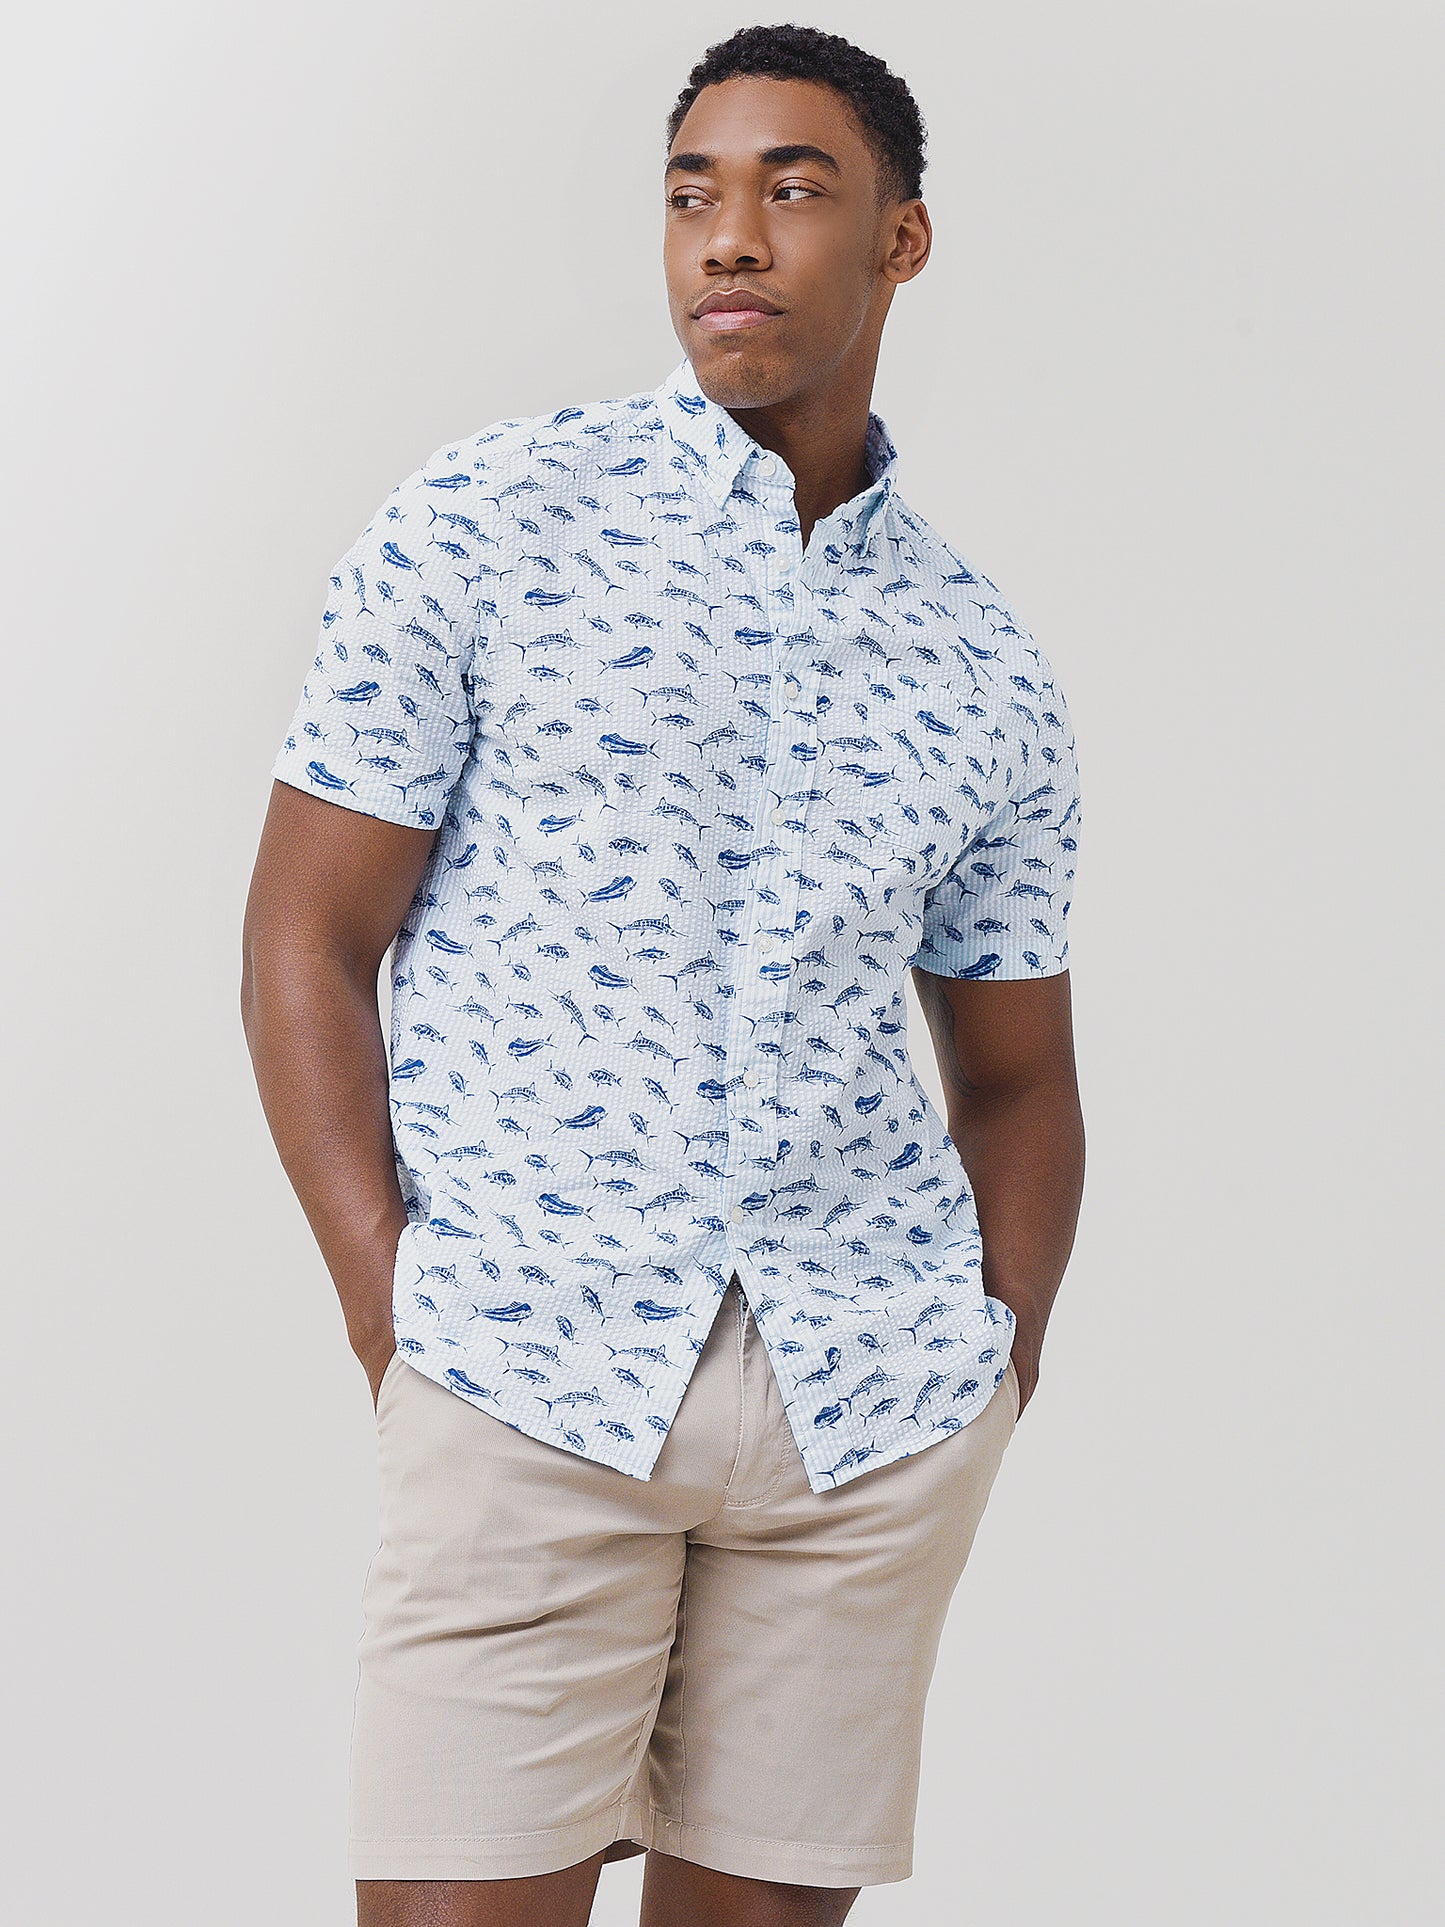 Southern Tide Men's Balboa Printed Seersucker Short Sleeve Button-Down Shirt